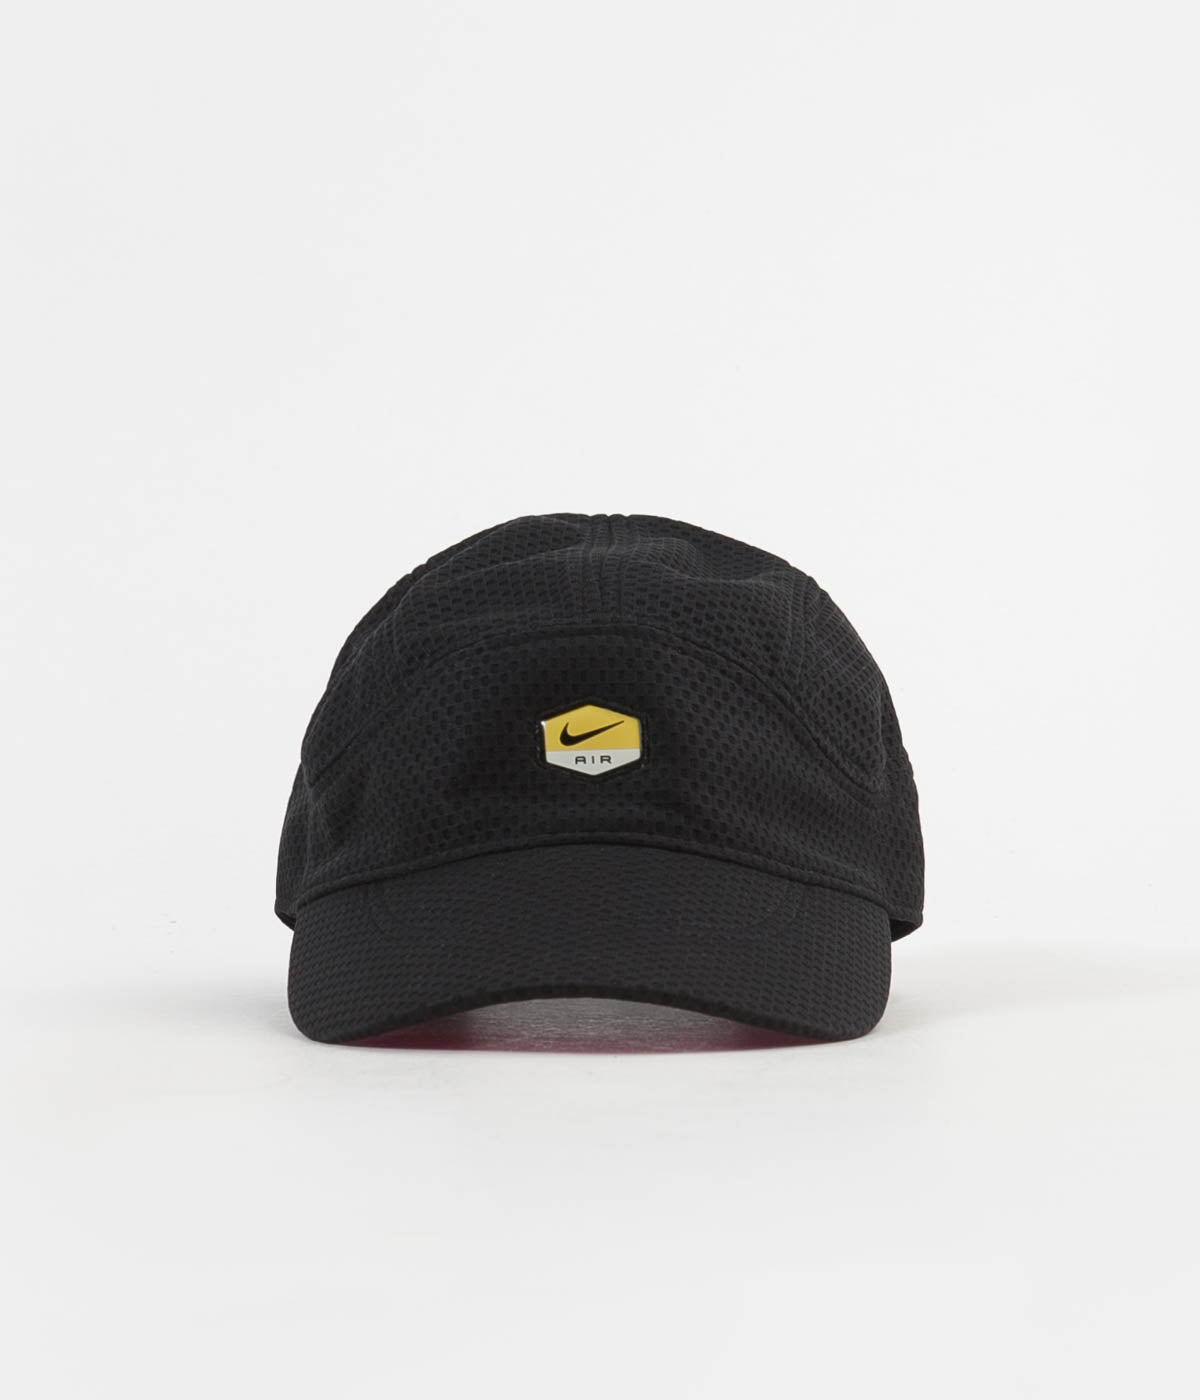 black tailwind hat